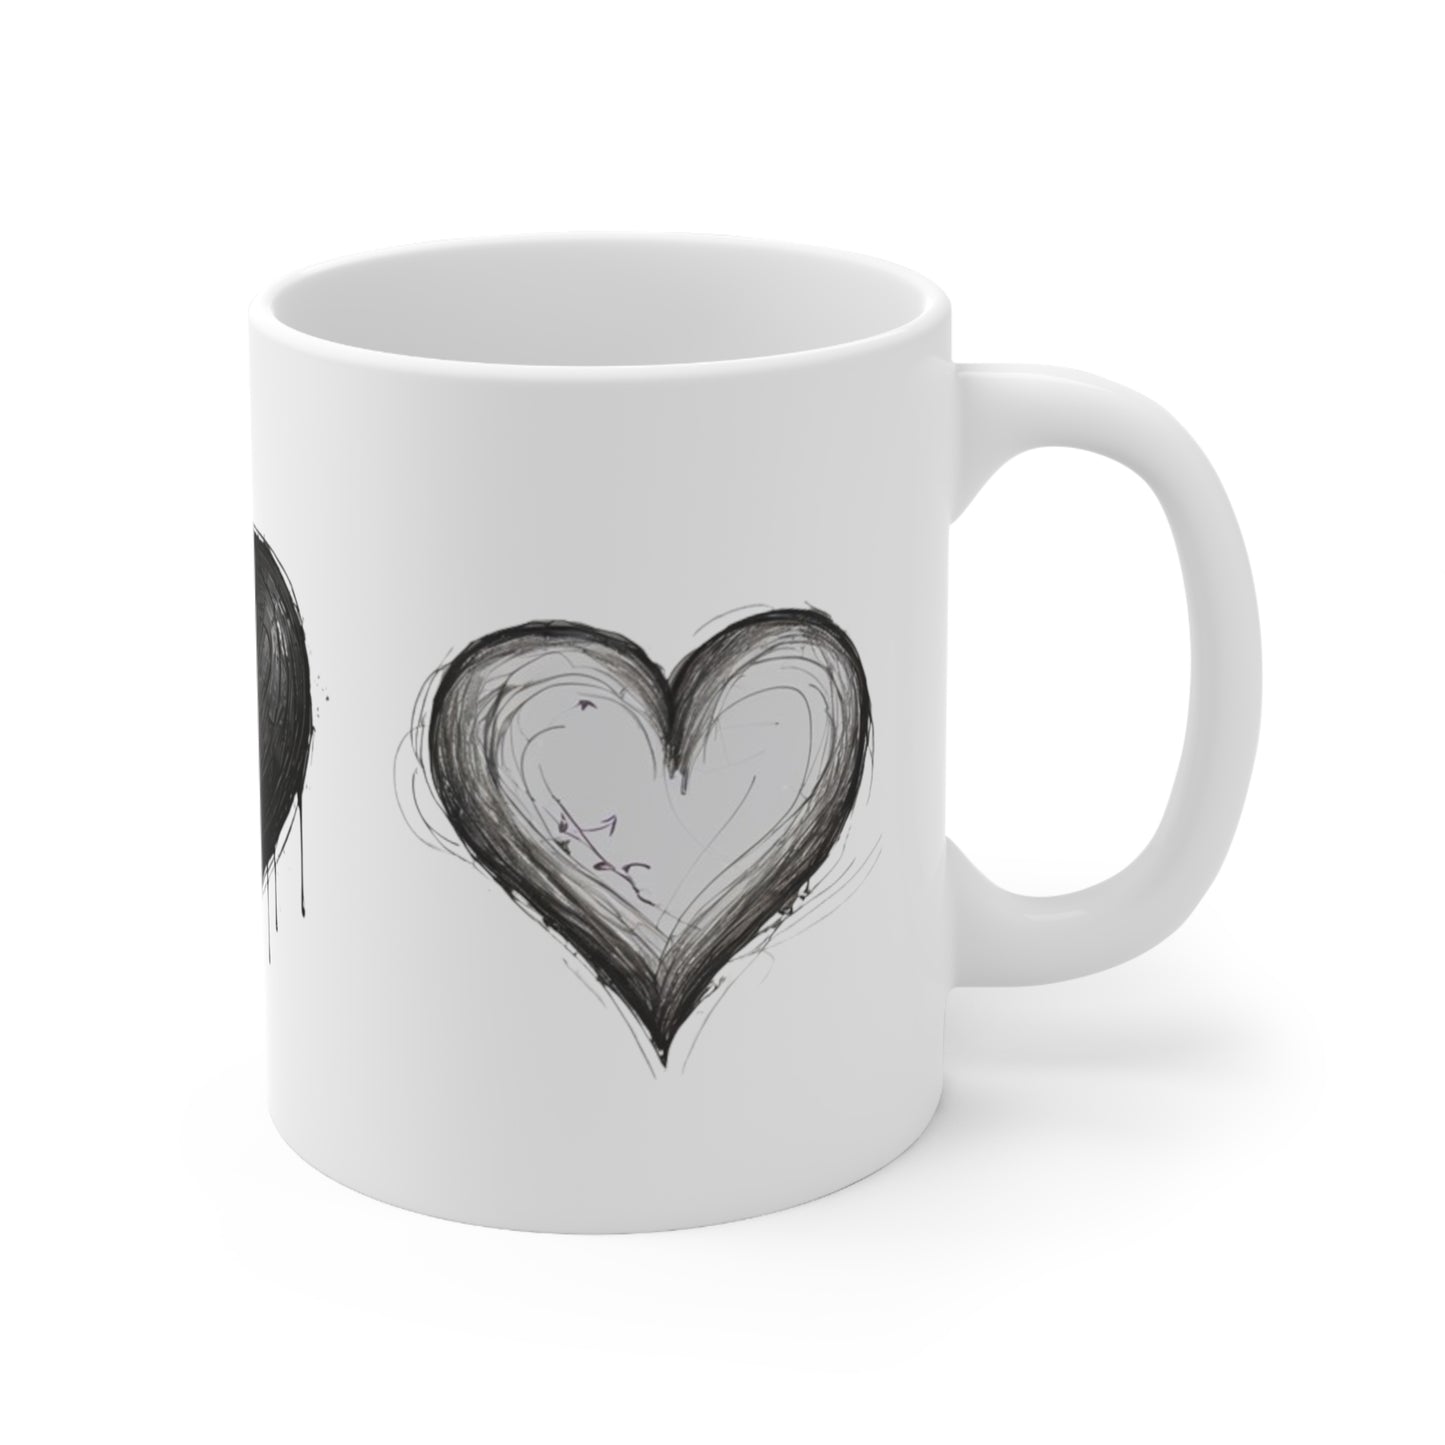 Sketched Love Hearts Mug, Black and White - Ceramic Coffee Mug 11oz